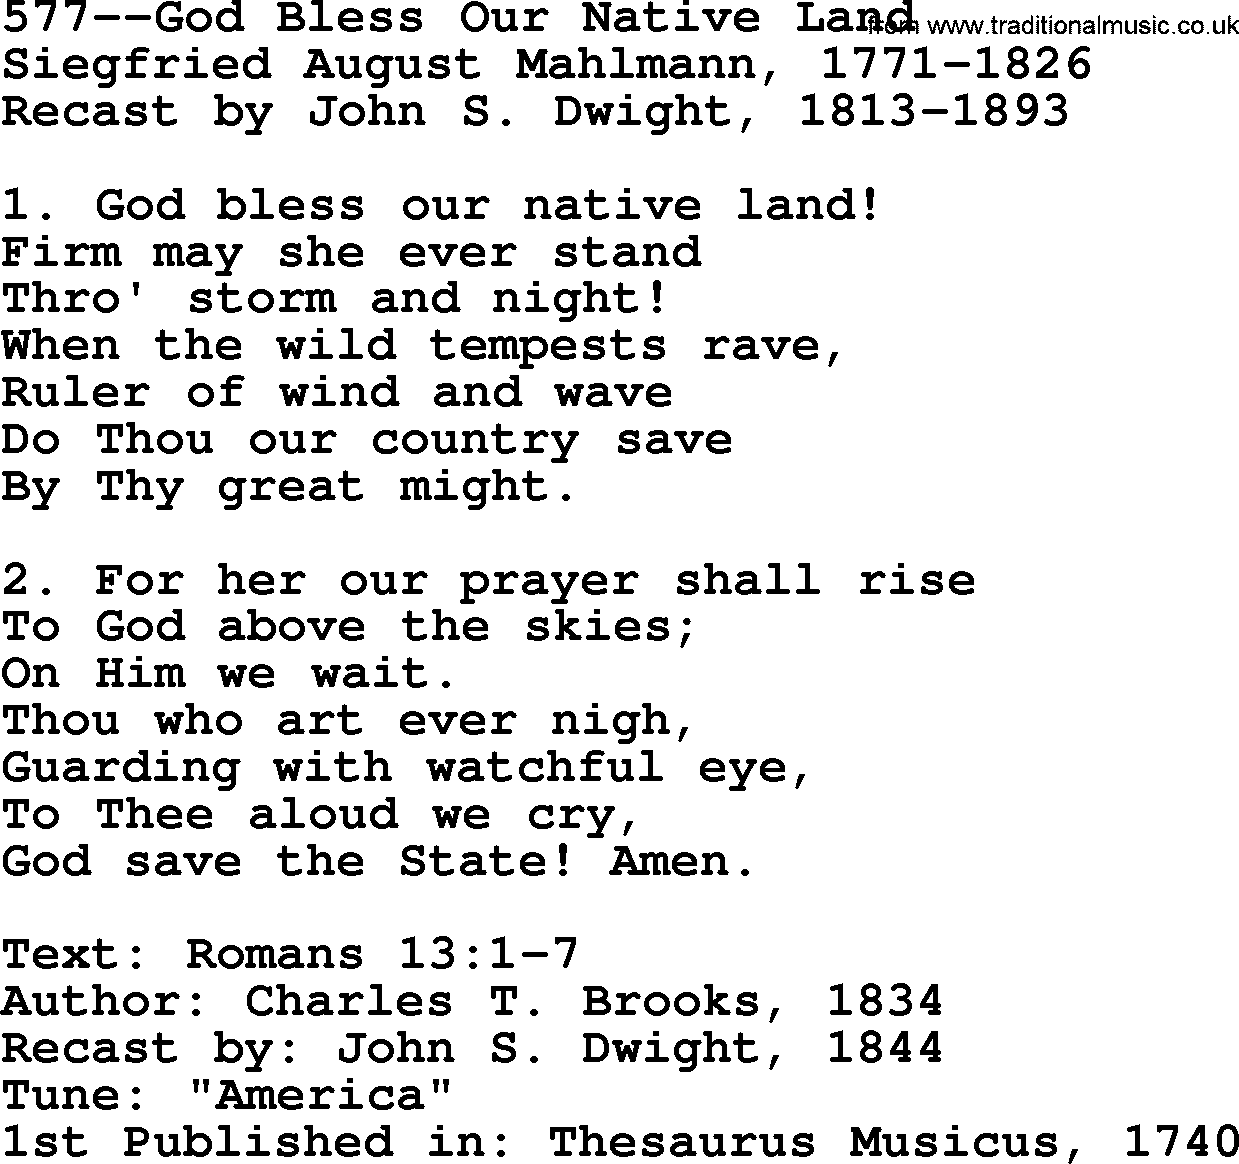 Lutheran Hymn: 577--God Bless Our Native Land.txt lyrics with PDF